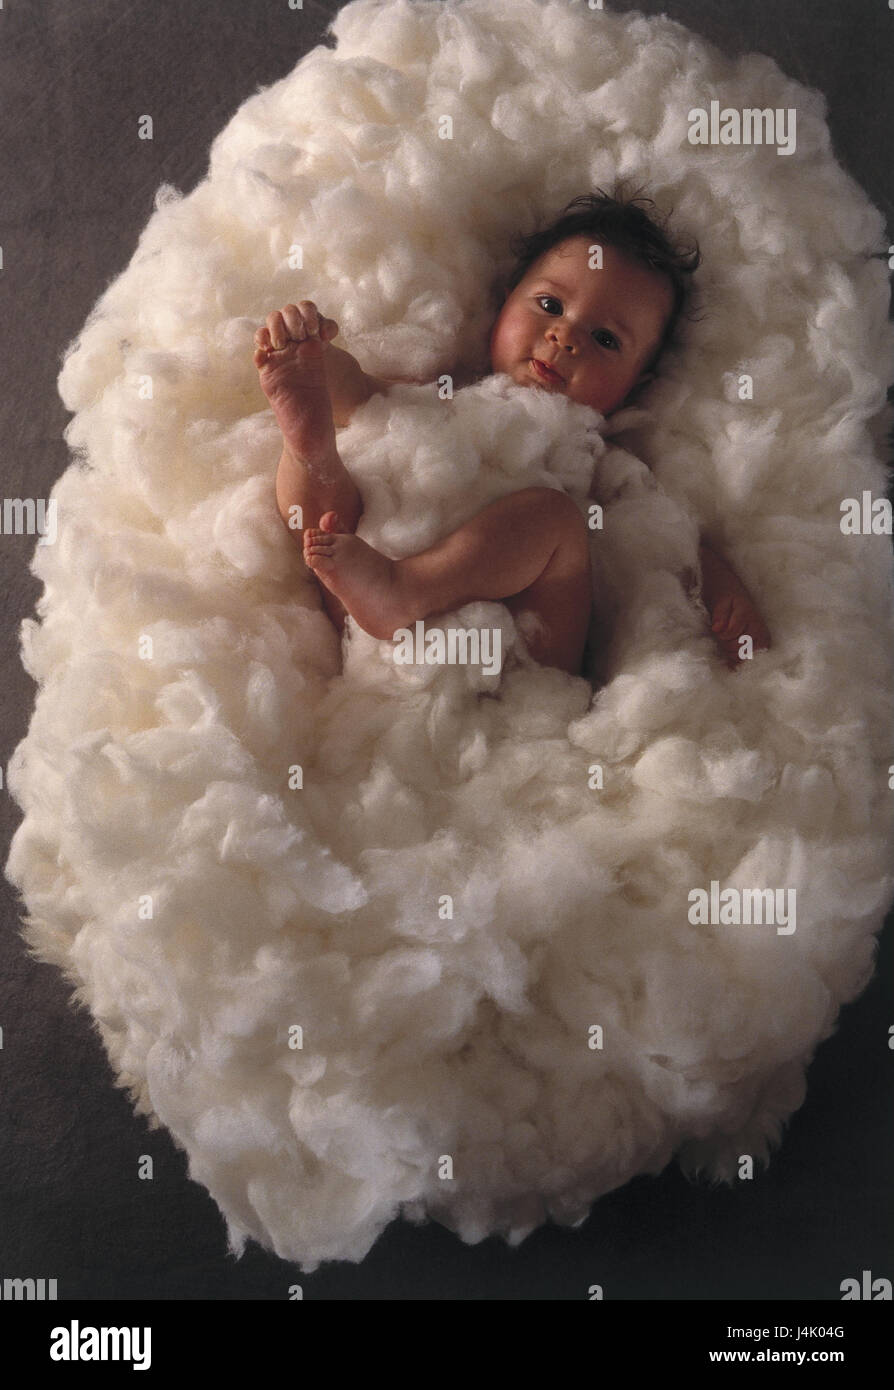 Cotton bed, baby, sleep inside, 'cloud bed', child, infant, sleep